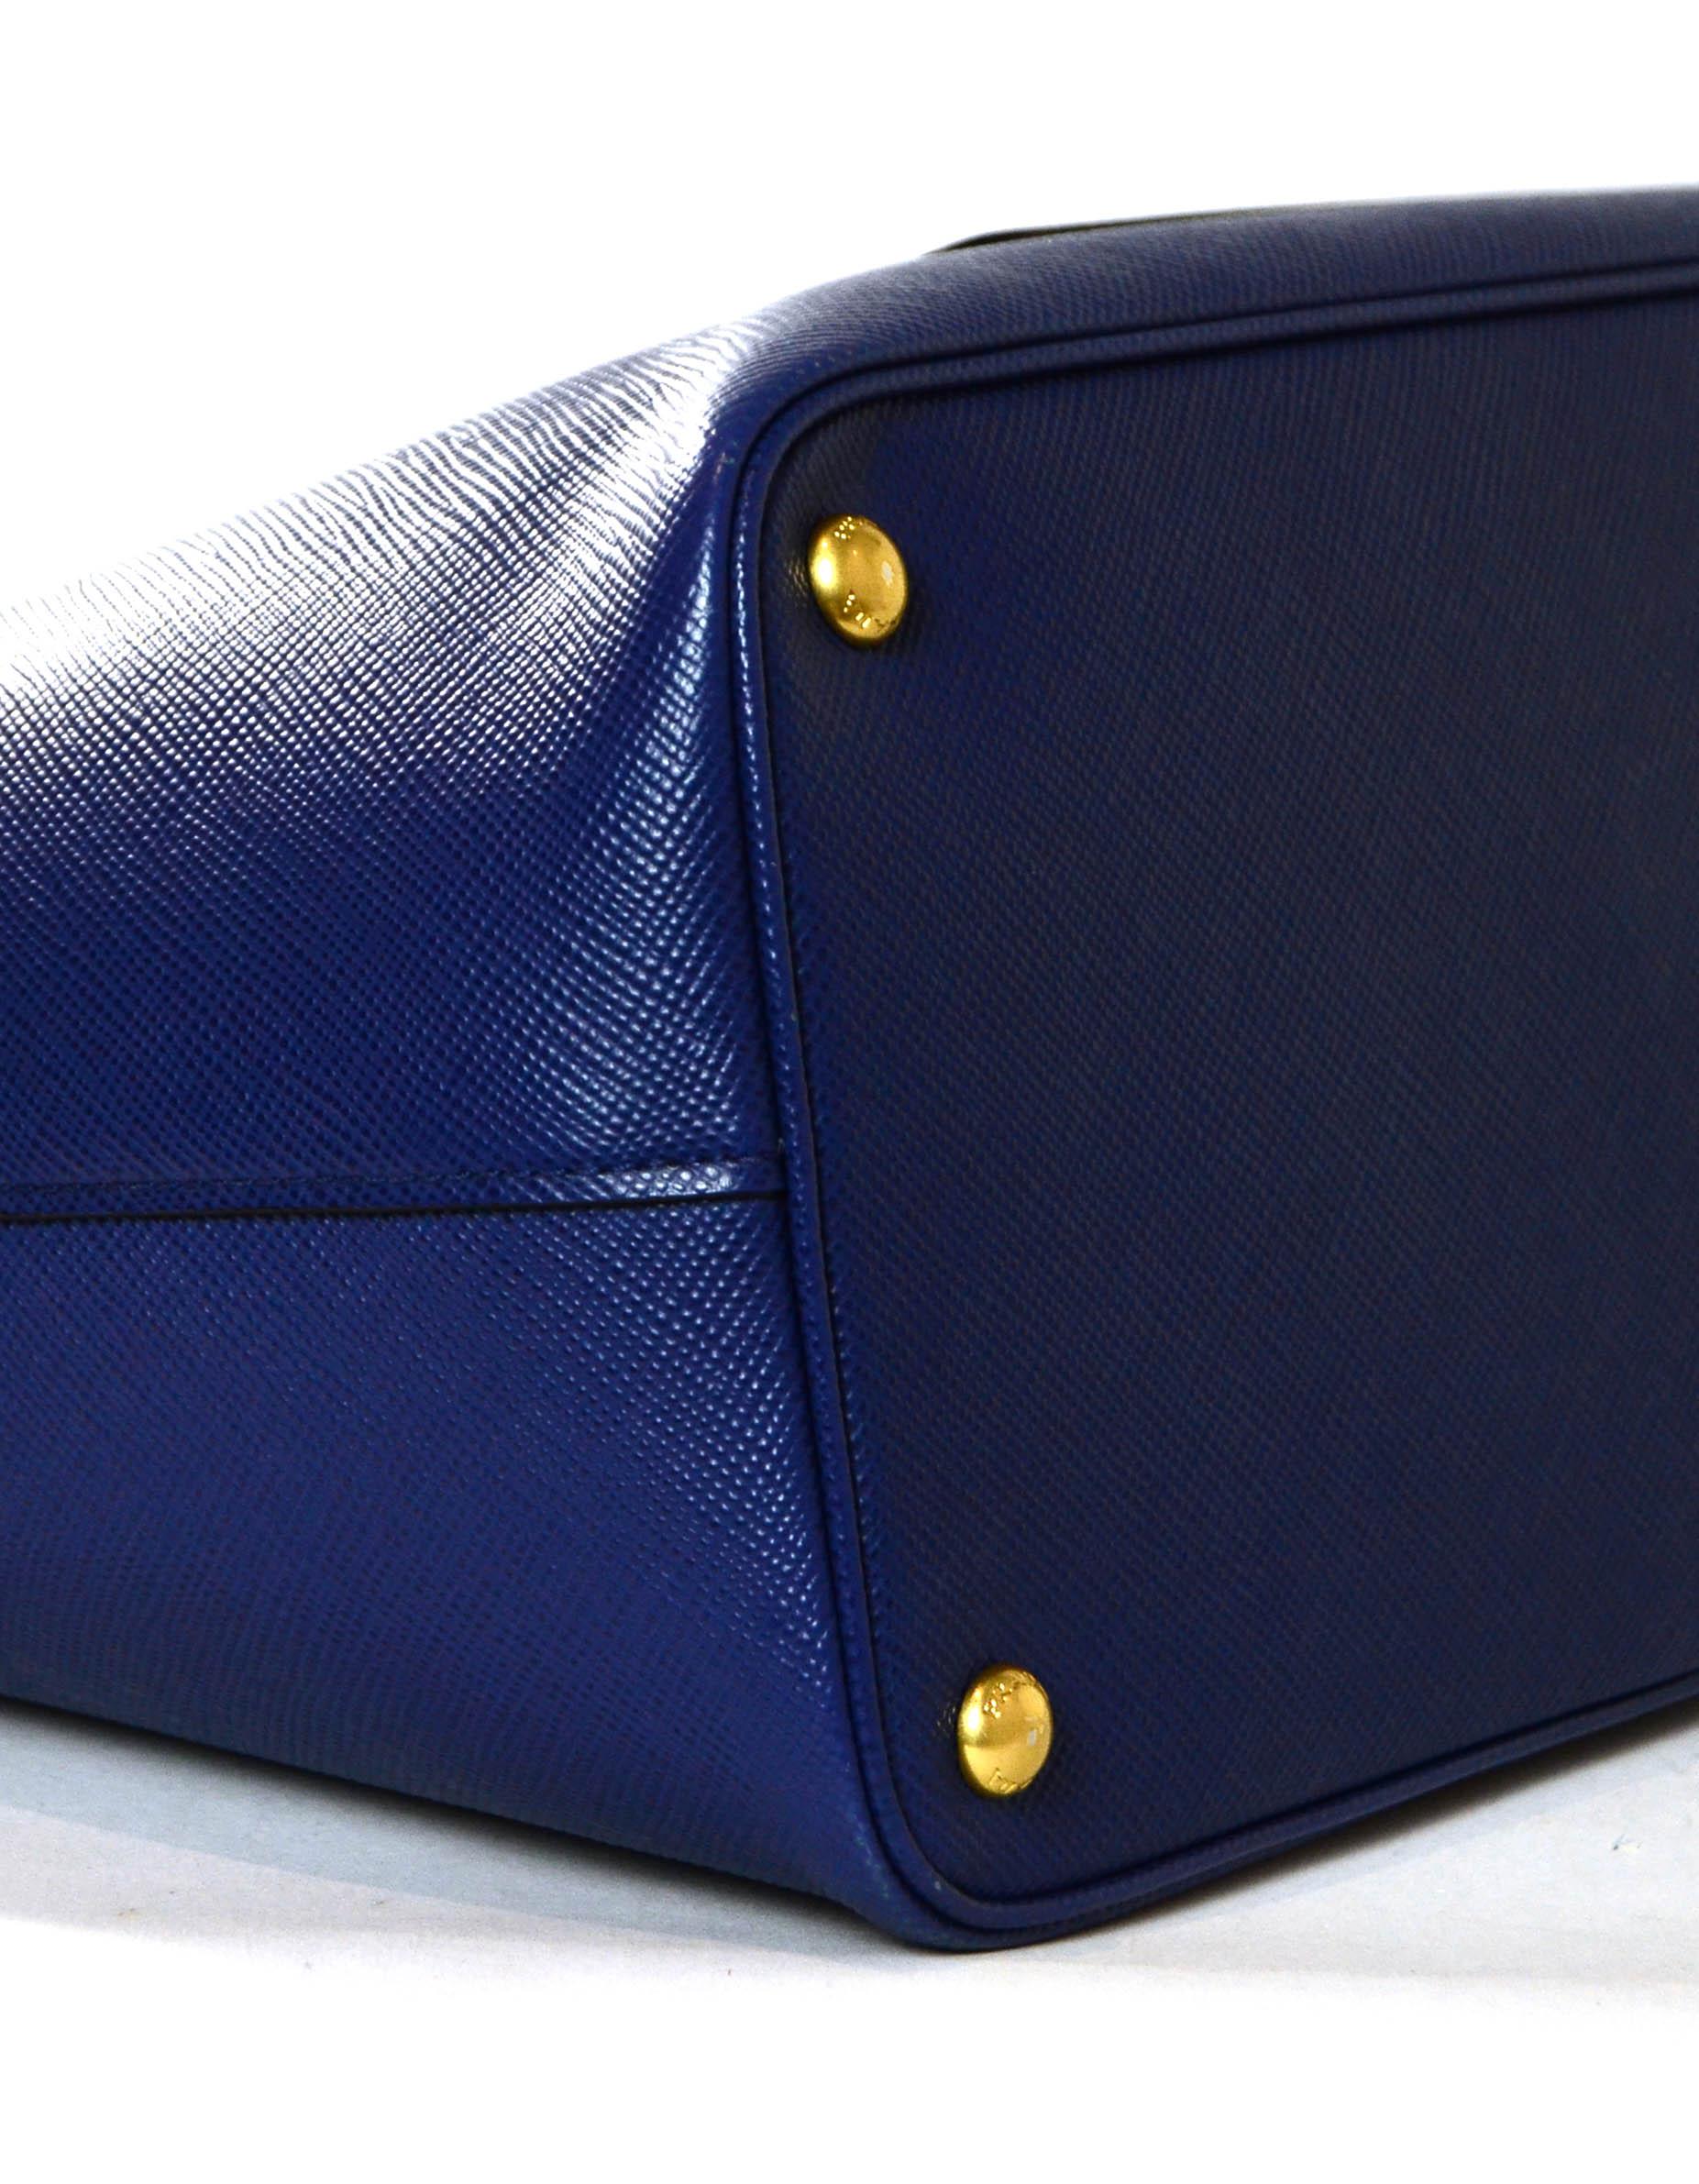 Prada Bluette Blue Saffiano Front Pocket Tote Bag w/ Detachable Strap In Excellent Condition In New York, NY